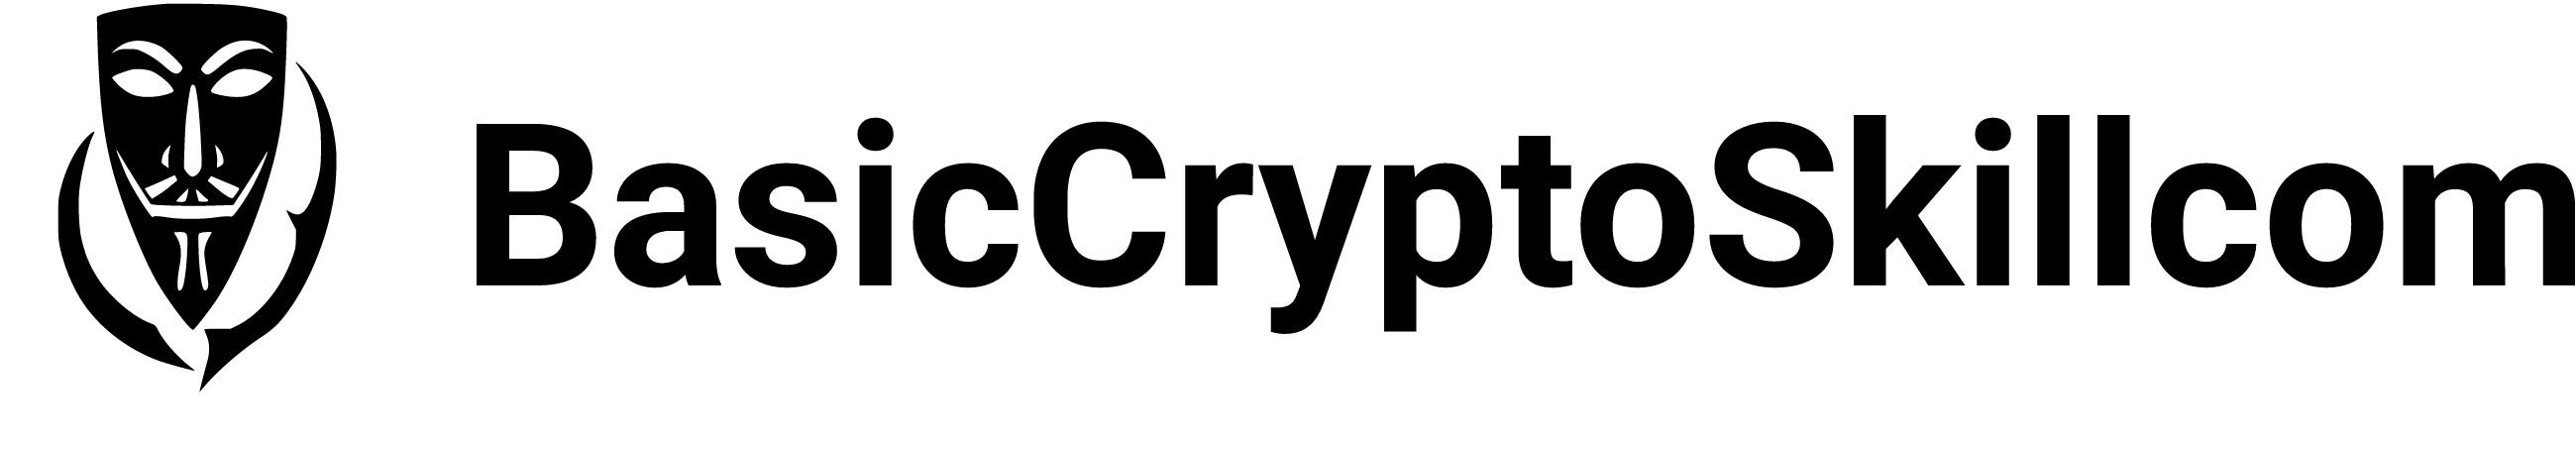 basiccryptoskill.com logo